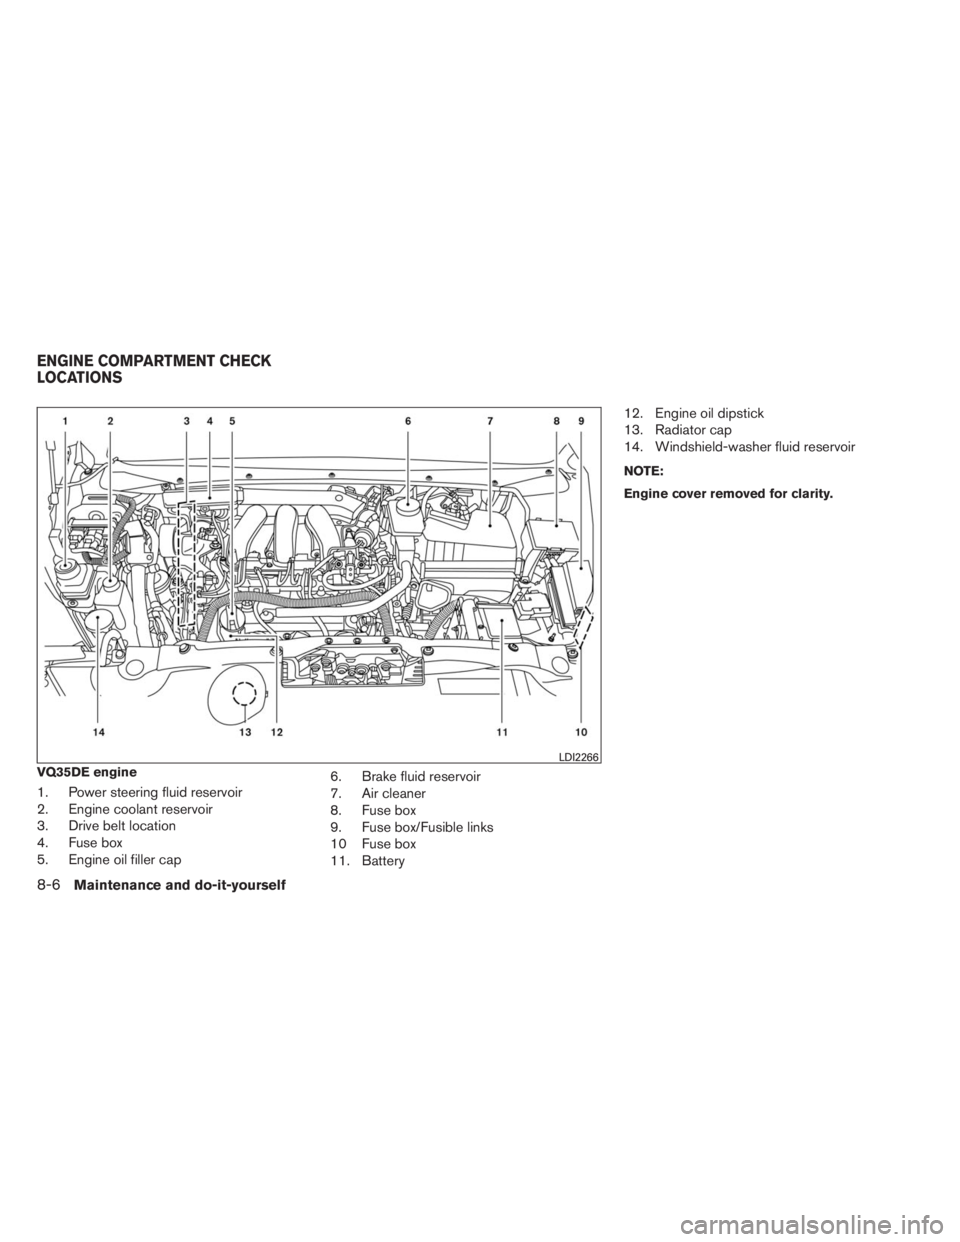 INFINITI QX60 HYBRID 2014 User Guide VQ35DE engine
1. Power steering fluid reservoir
2. Engine coolant reservoir
3. Drive belt location
4. Fuse box
5. Engine oil filler cap6. Brake fluid reservoir
7. Air cleaner
8. Fuse box
9. Fuse box/F